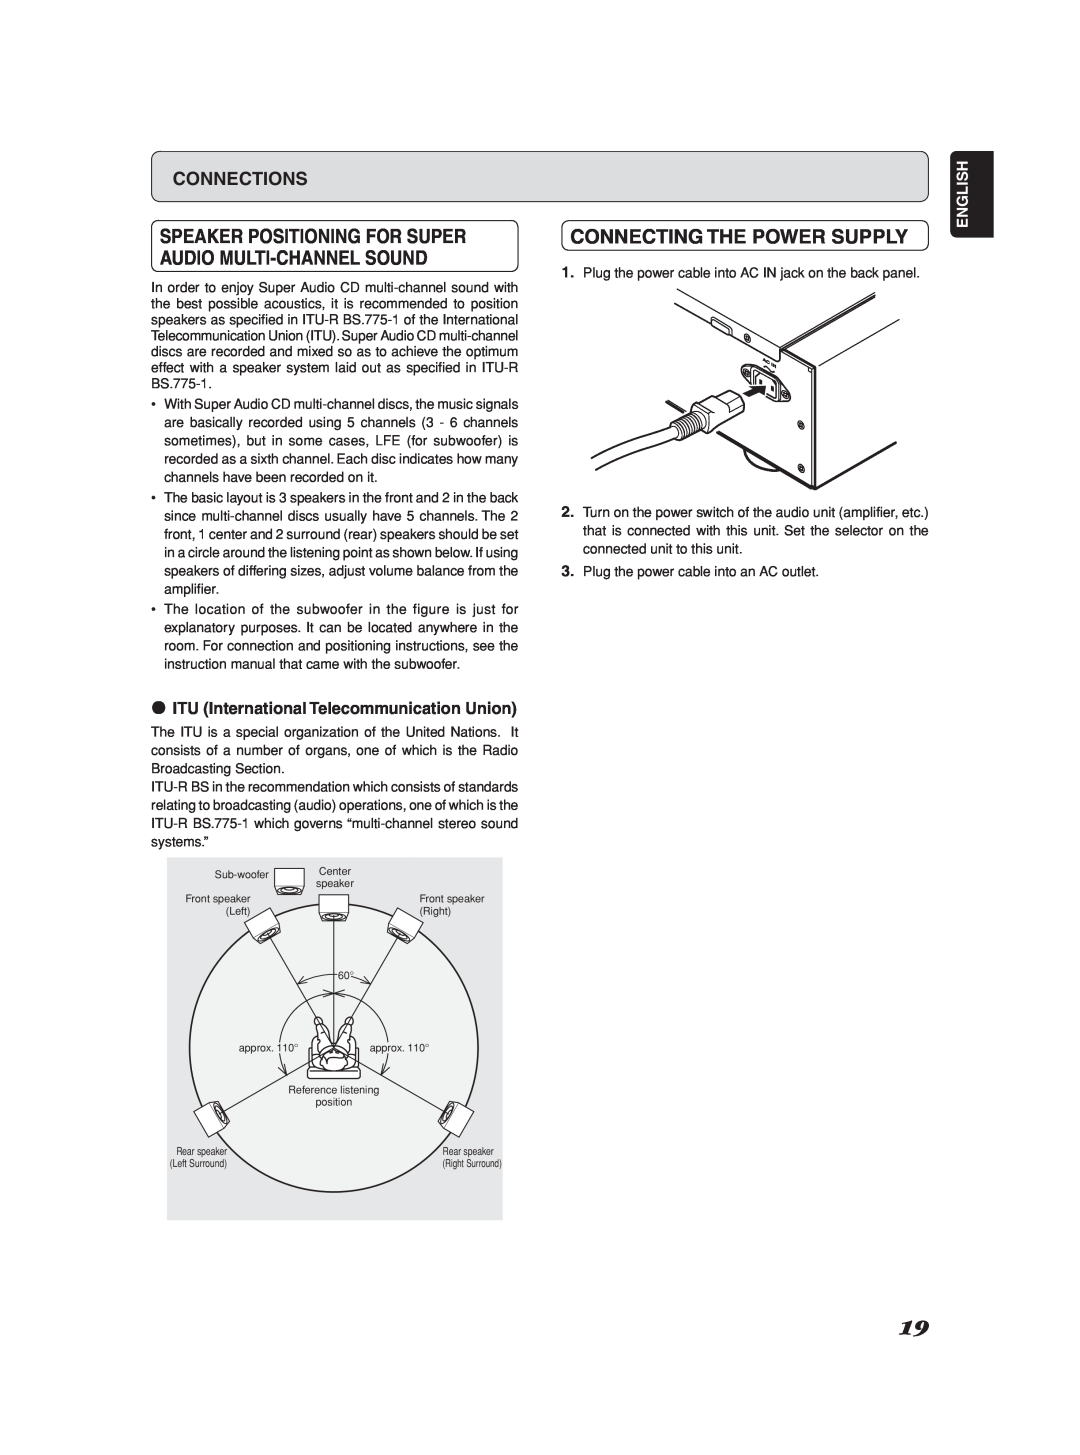 Marantz Model SC-11S1 manual Connecting The Power Supply, ¶ITU International Telecommunication Union, English 